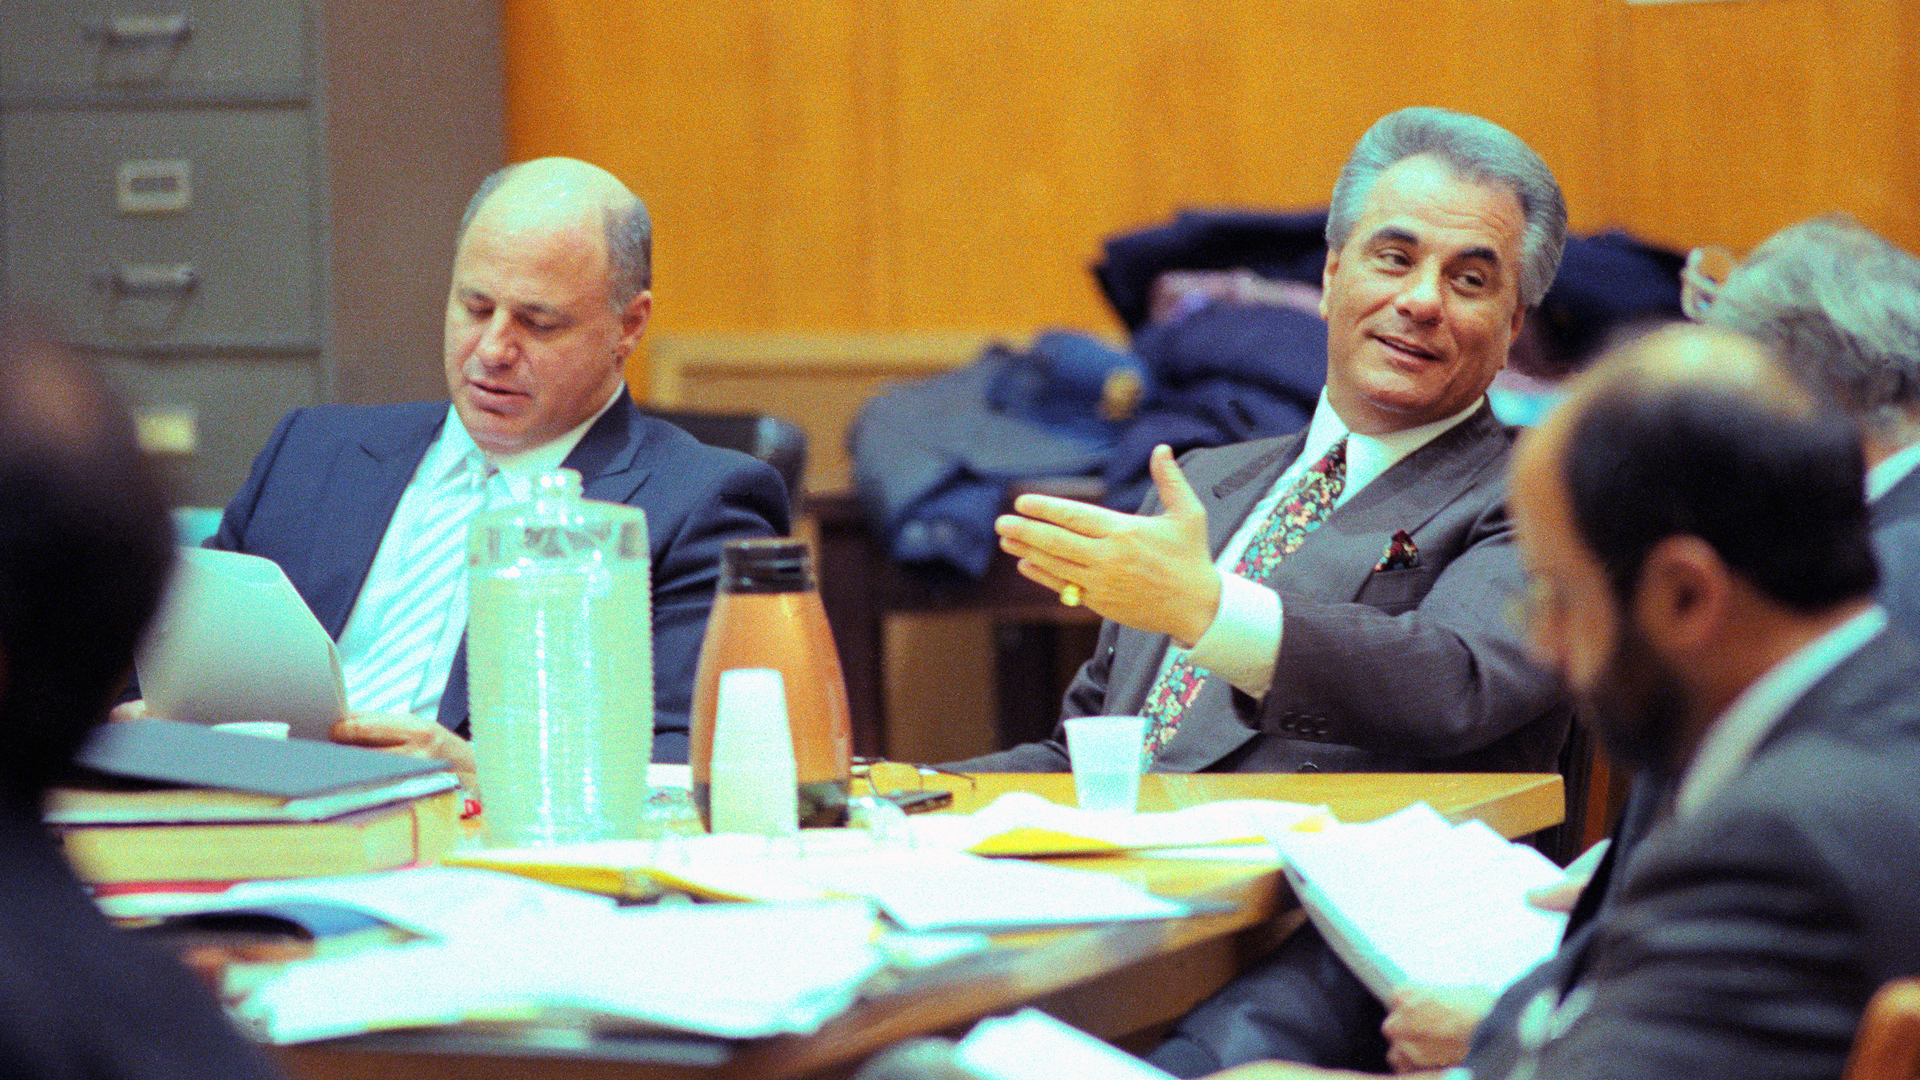 Mafia boss John Gotti, aka “Teflon Don,” sentenced to life | HISTORY